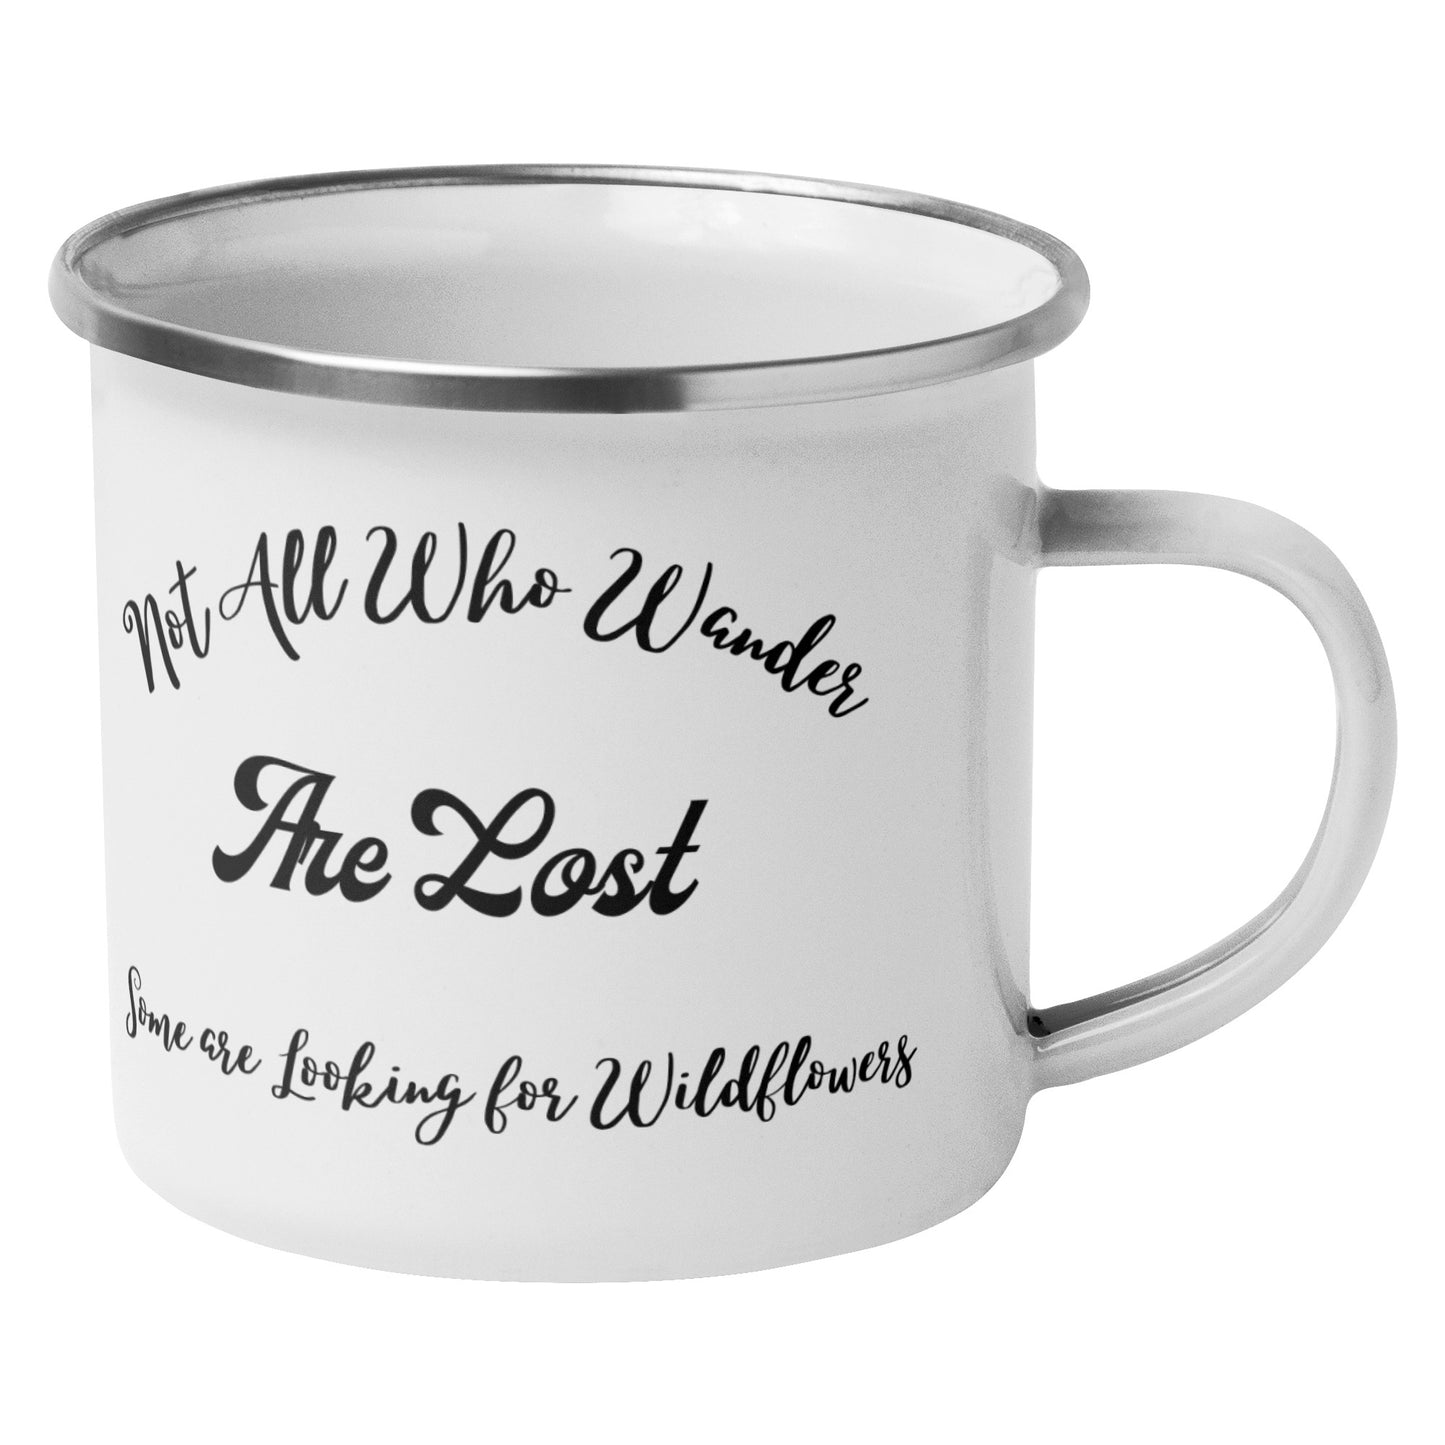 Not All Who Wander are Lost Camping Mug, Camper Mug, Travel Mug, Travel Cup, Stainless Steel Mug, Gift for Camper